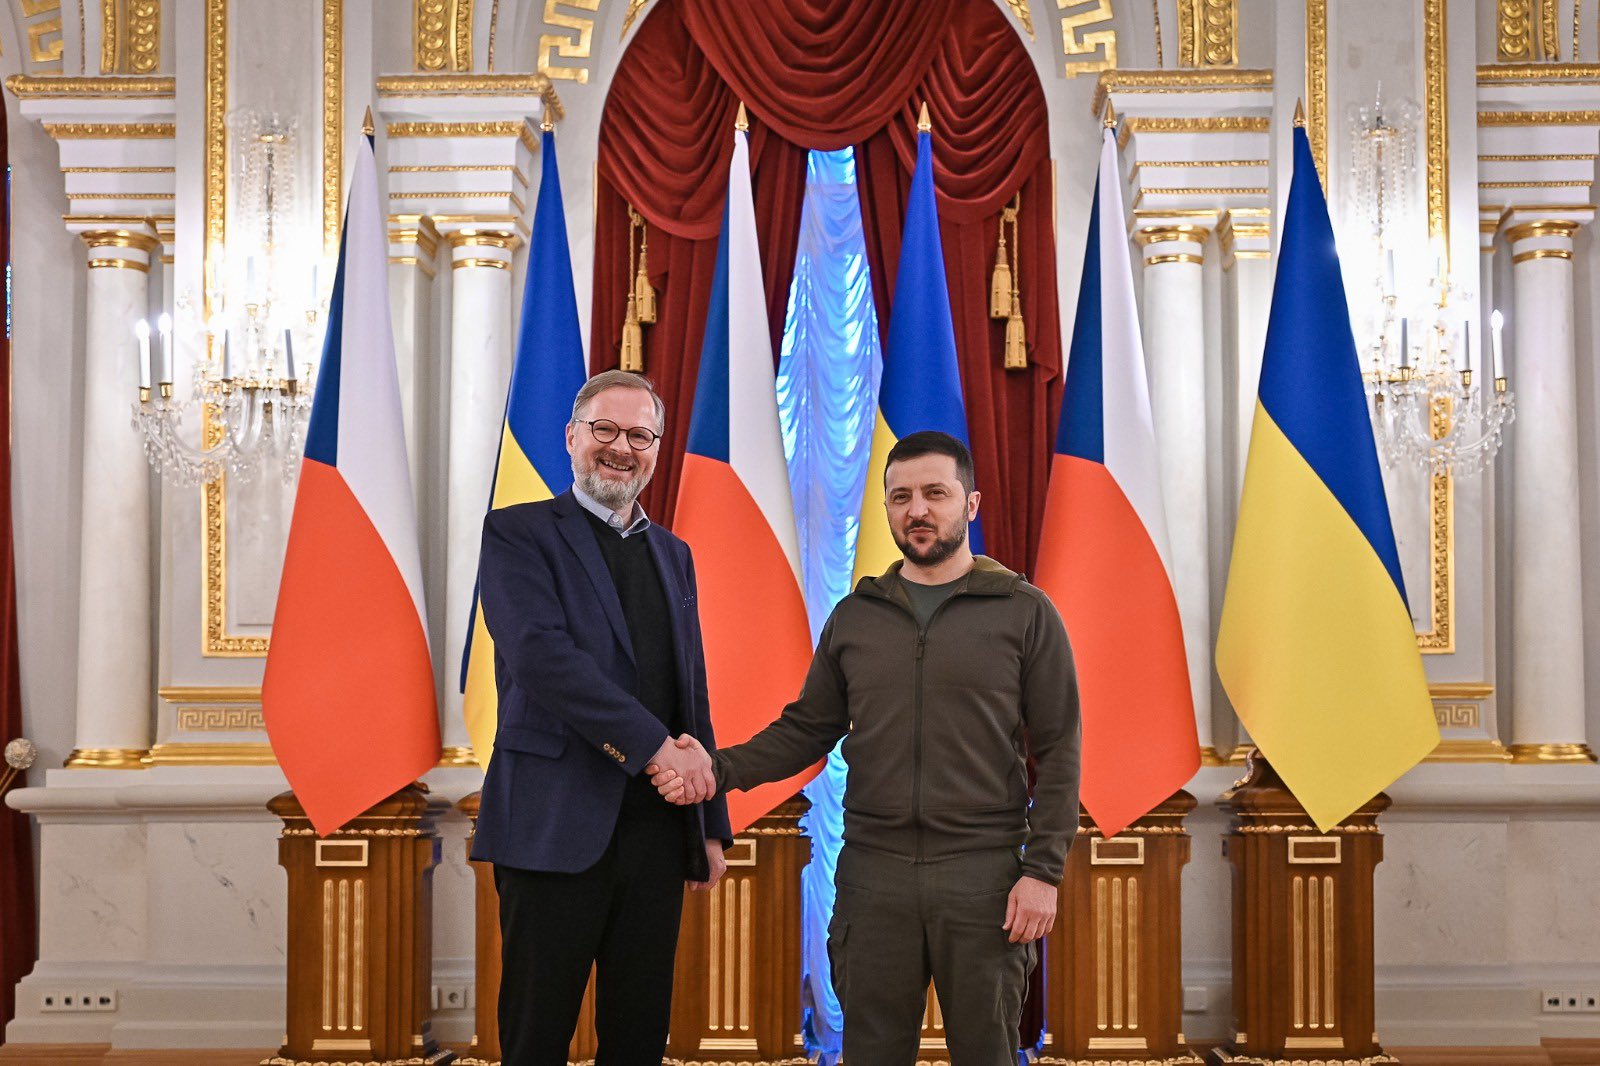 Czech Republic’s Strategic Partnership with Ukraine: Lessons Learned and the Path Forward (Tomáš Dvořák and Pavel Havlíček)